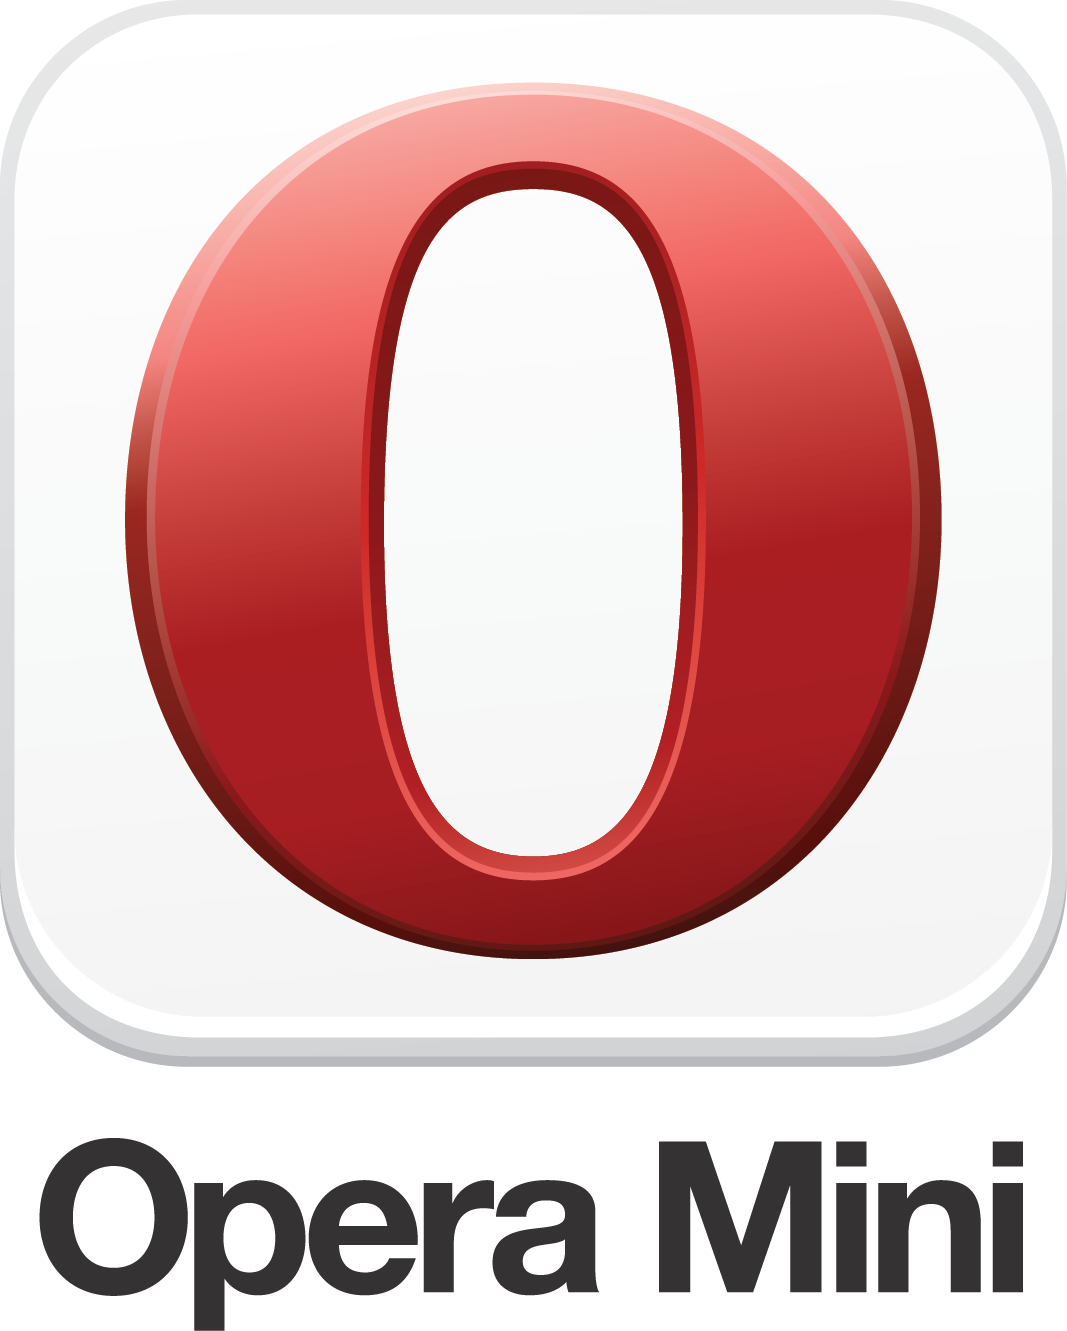 opera mini logo and icon